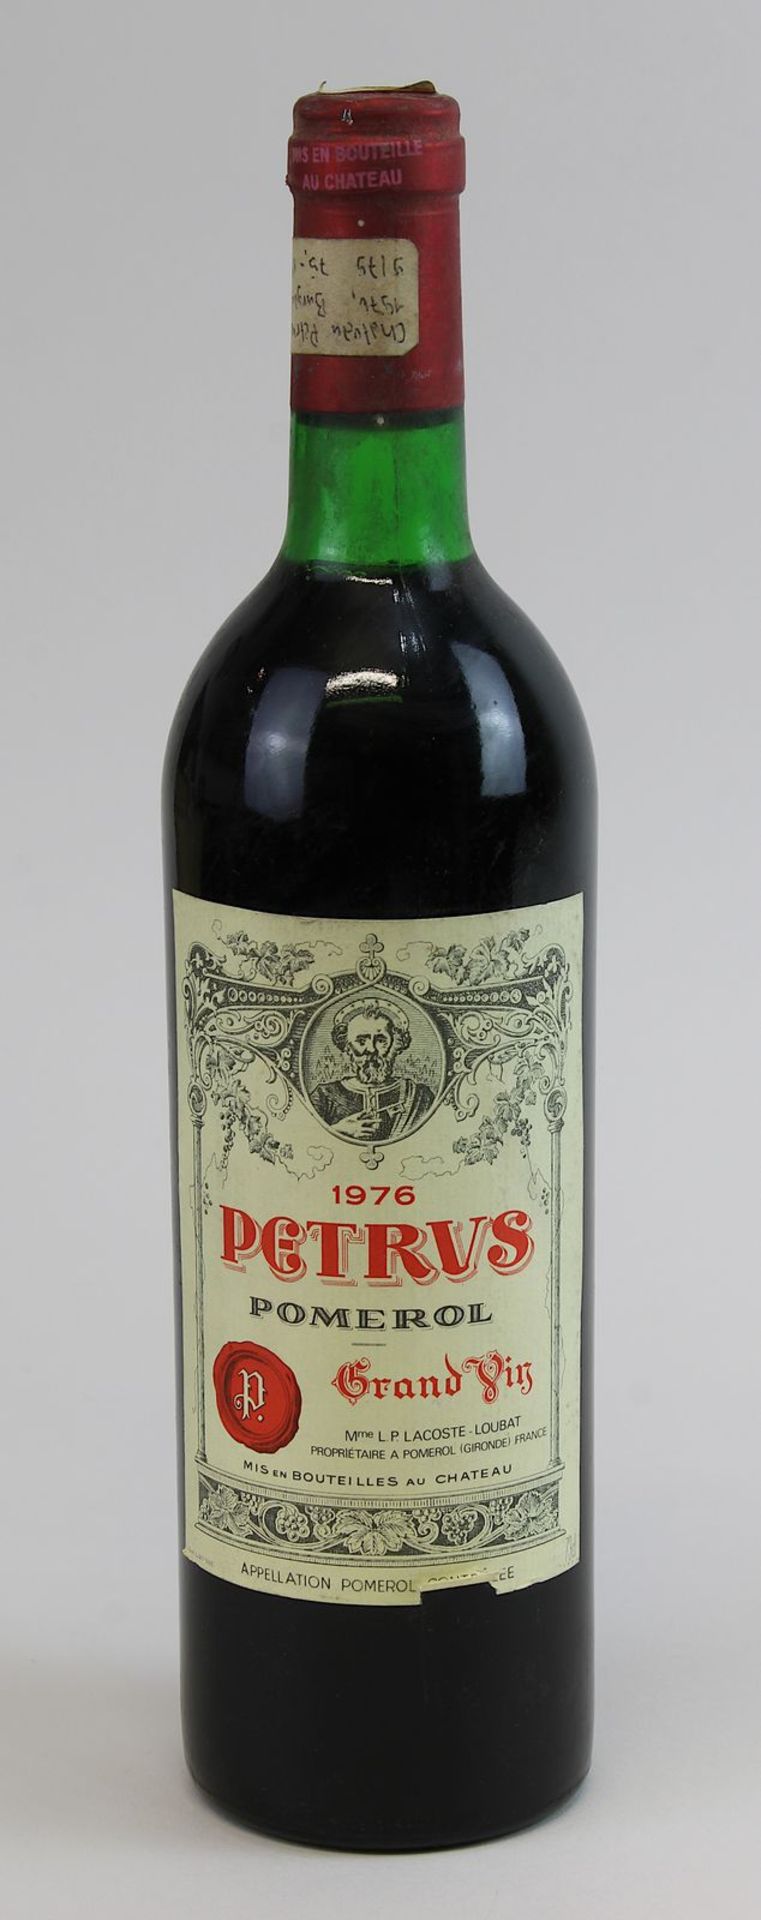 Eine Flasche 1976er Petrus Pomerol, Gironde, Grand Vin, Mme. L.P. Lacoste-Loubat, Füllhöhe: